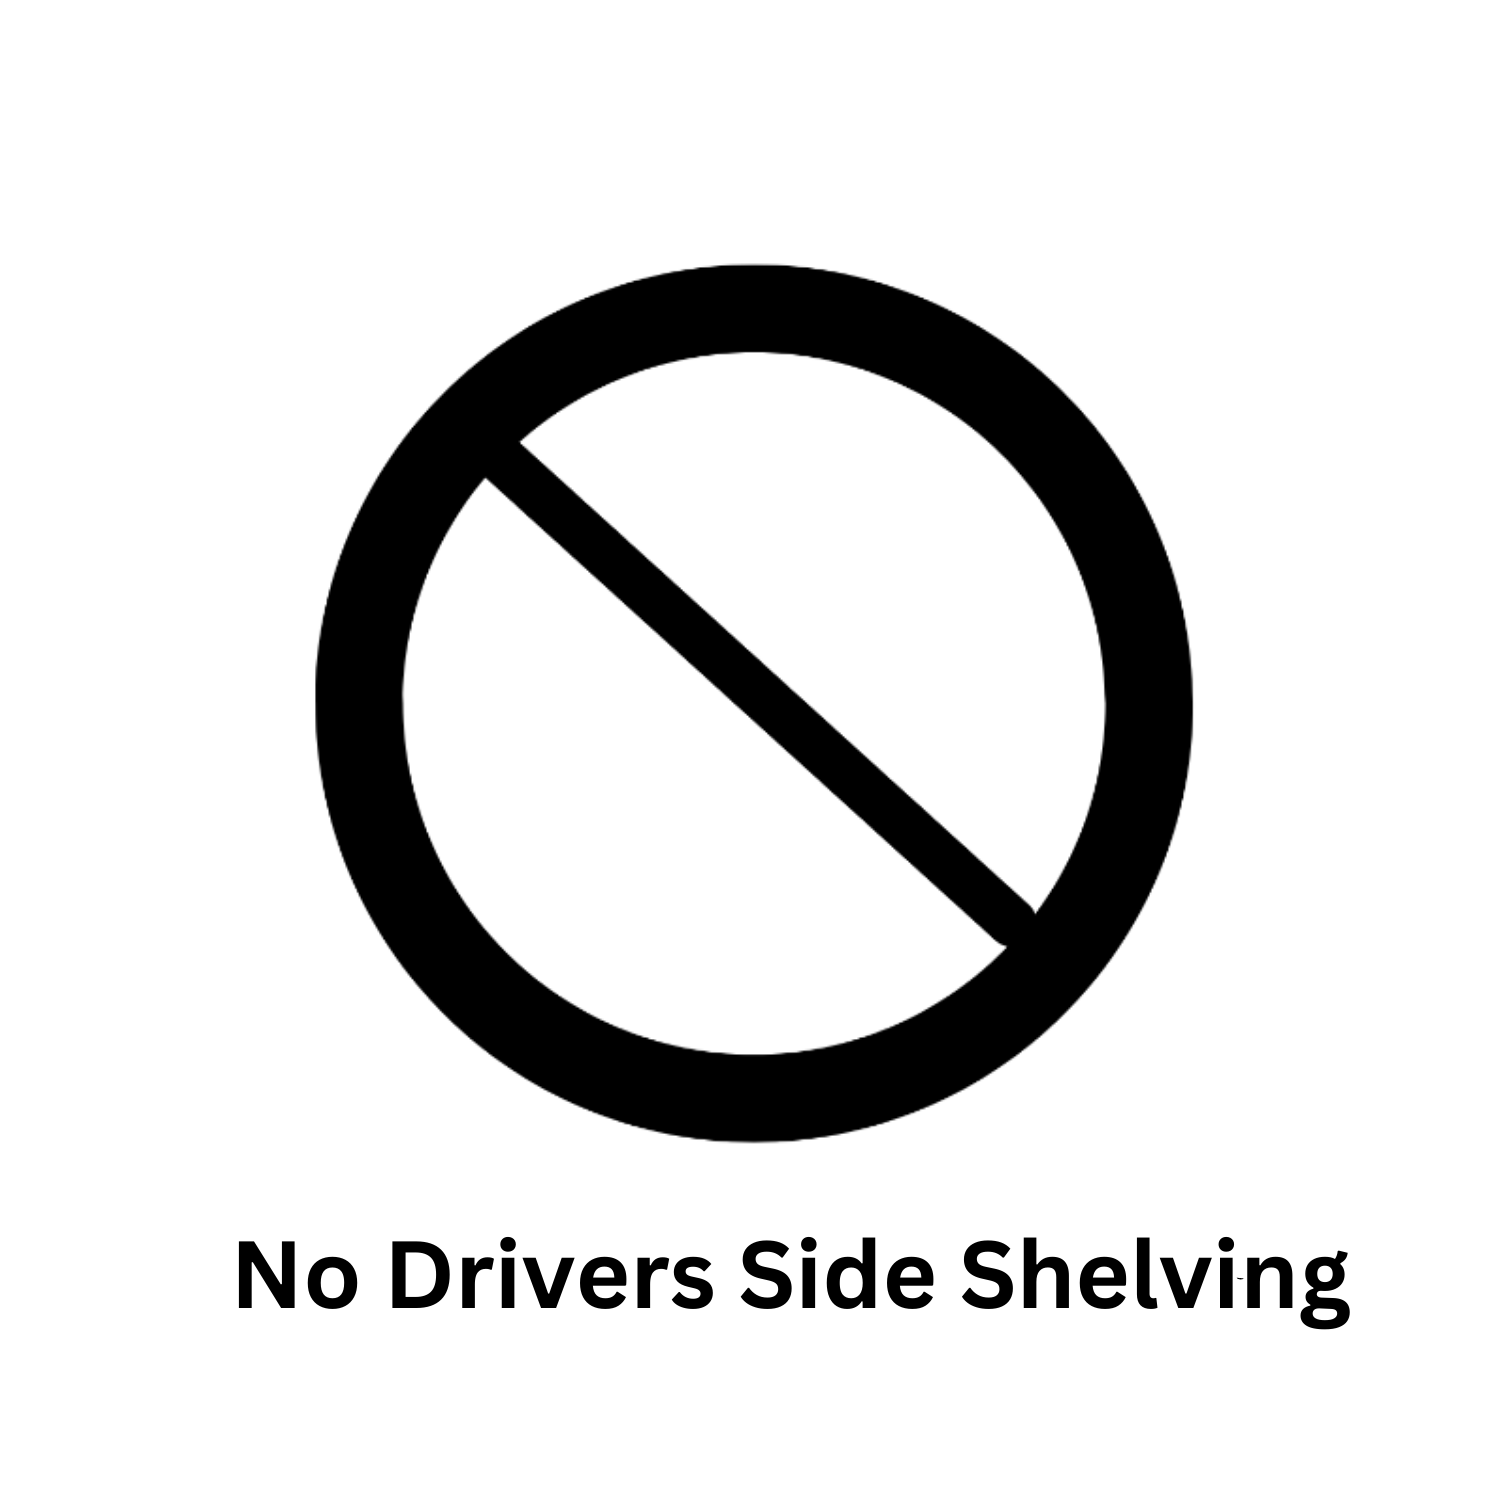 No Drivers Side Shelving